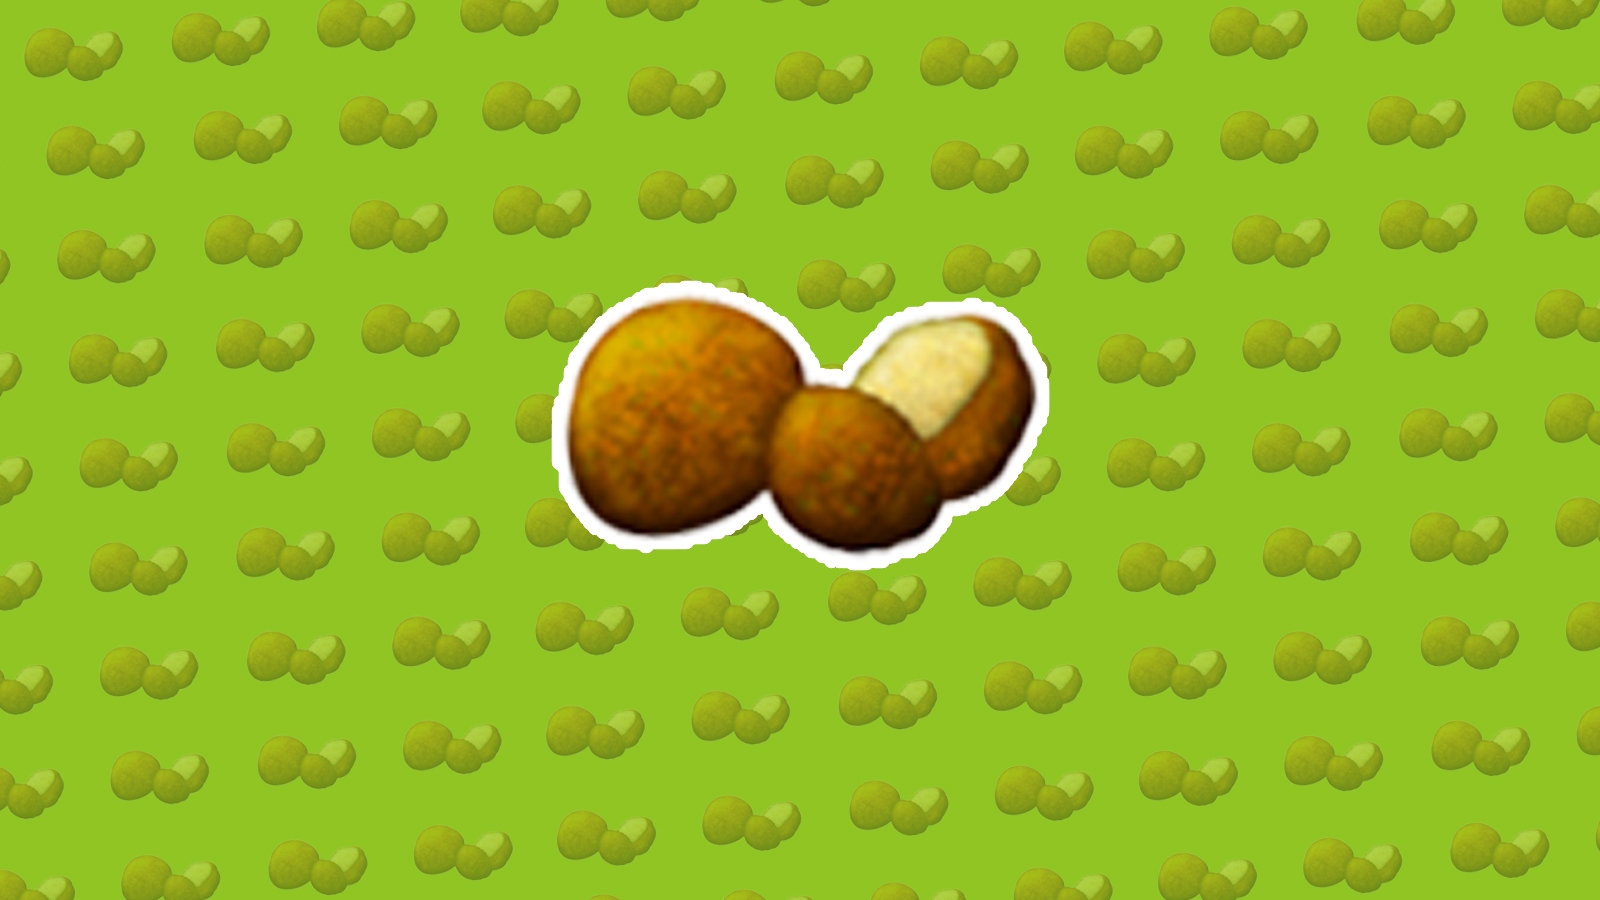 falafel emoji